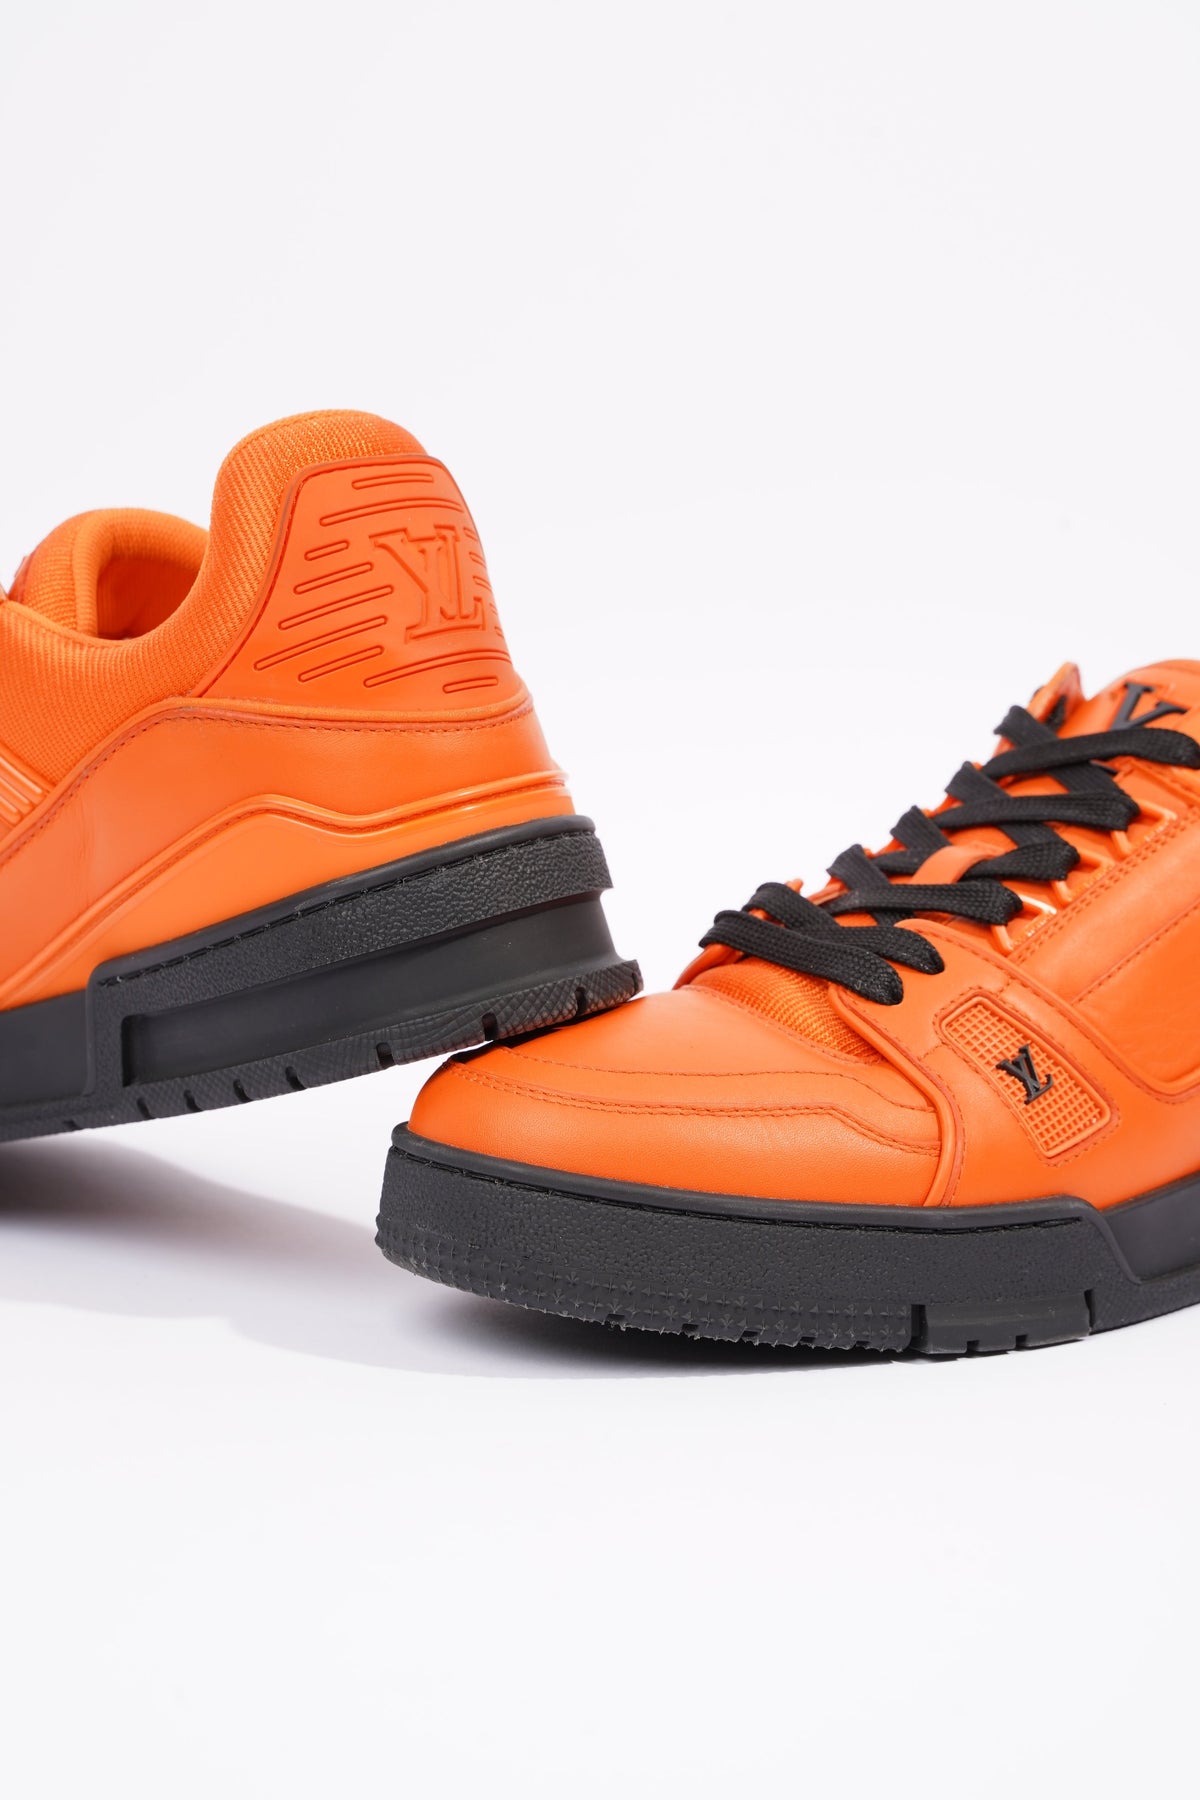 Louis Vuitton Mens Virgil Abloh Sneaker Orange / Black EU 41 / UK 7 – Luxe  Collective